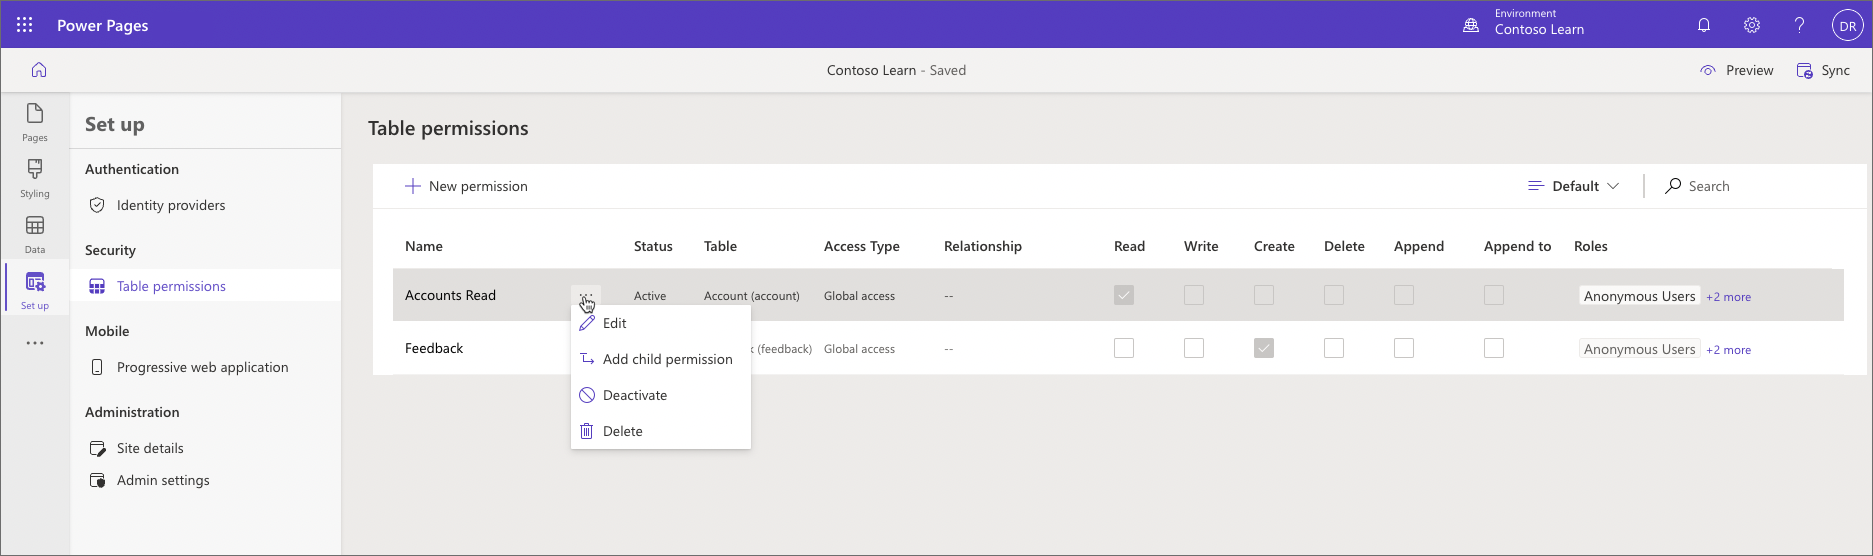 Screenshot of settings panel in Power Apps portals Studio.